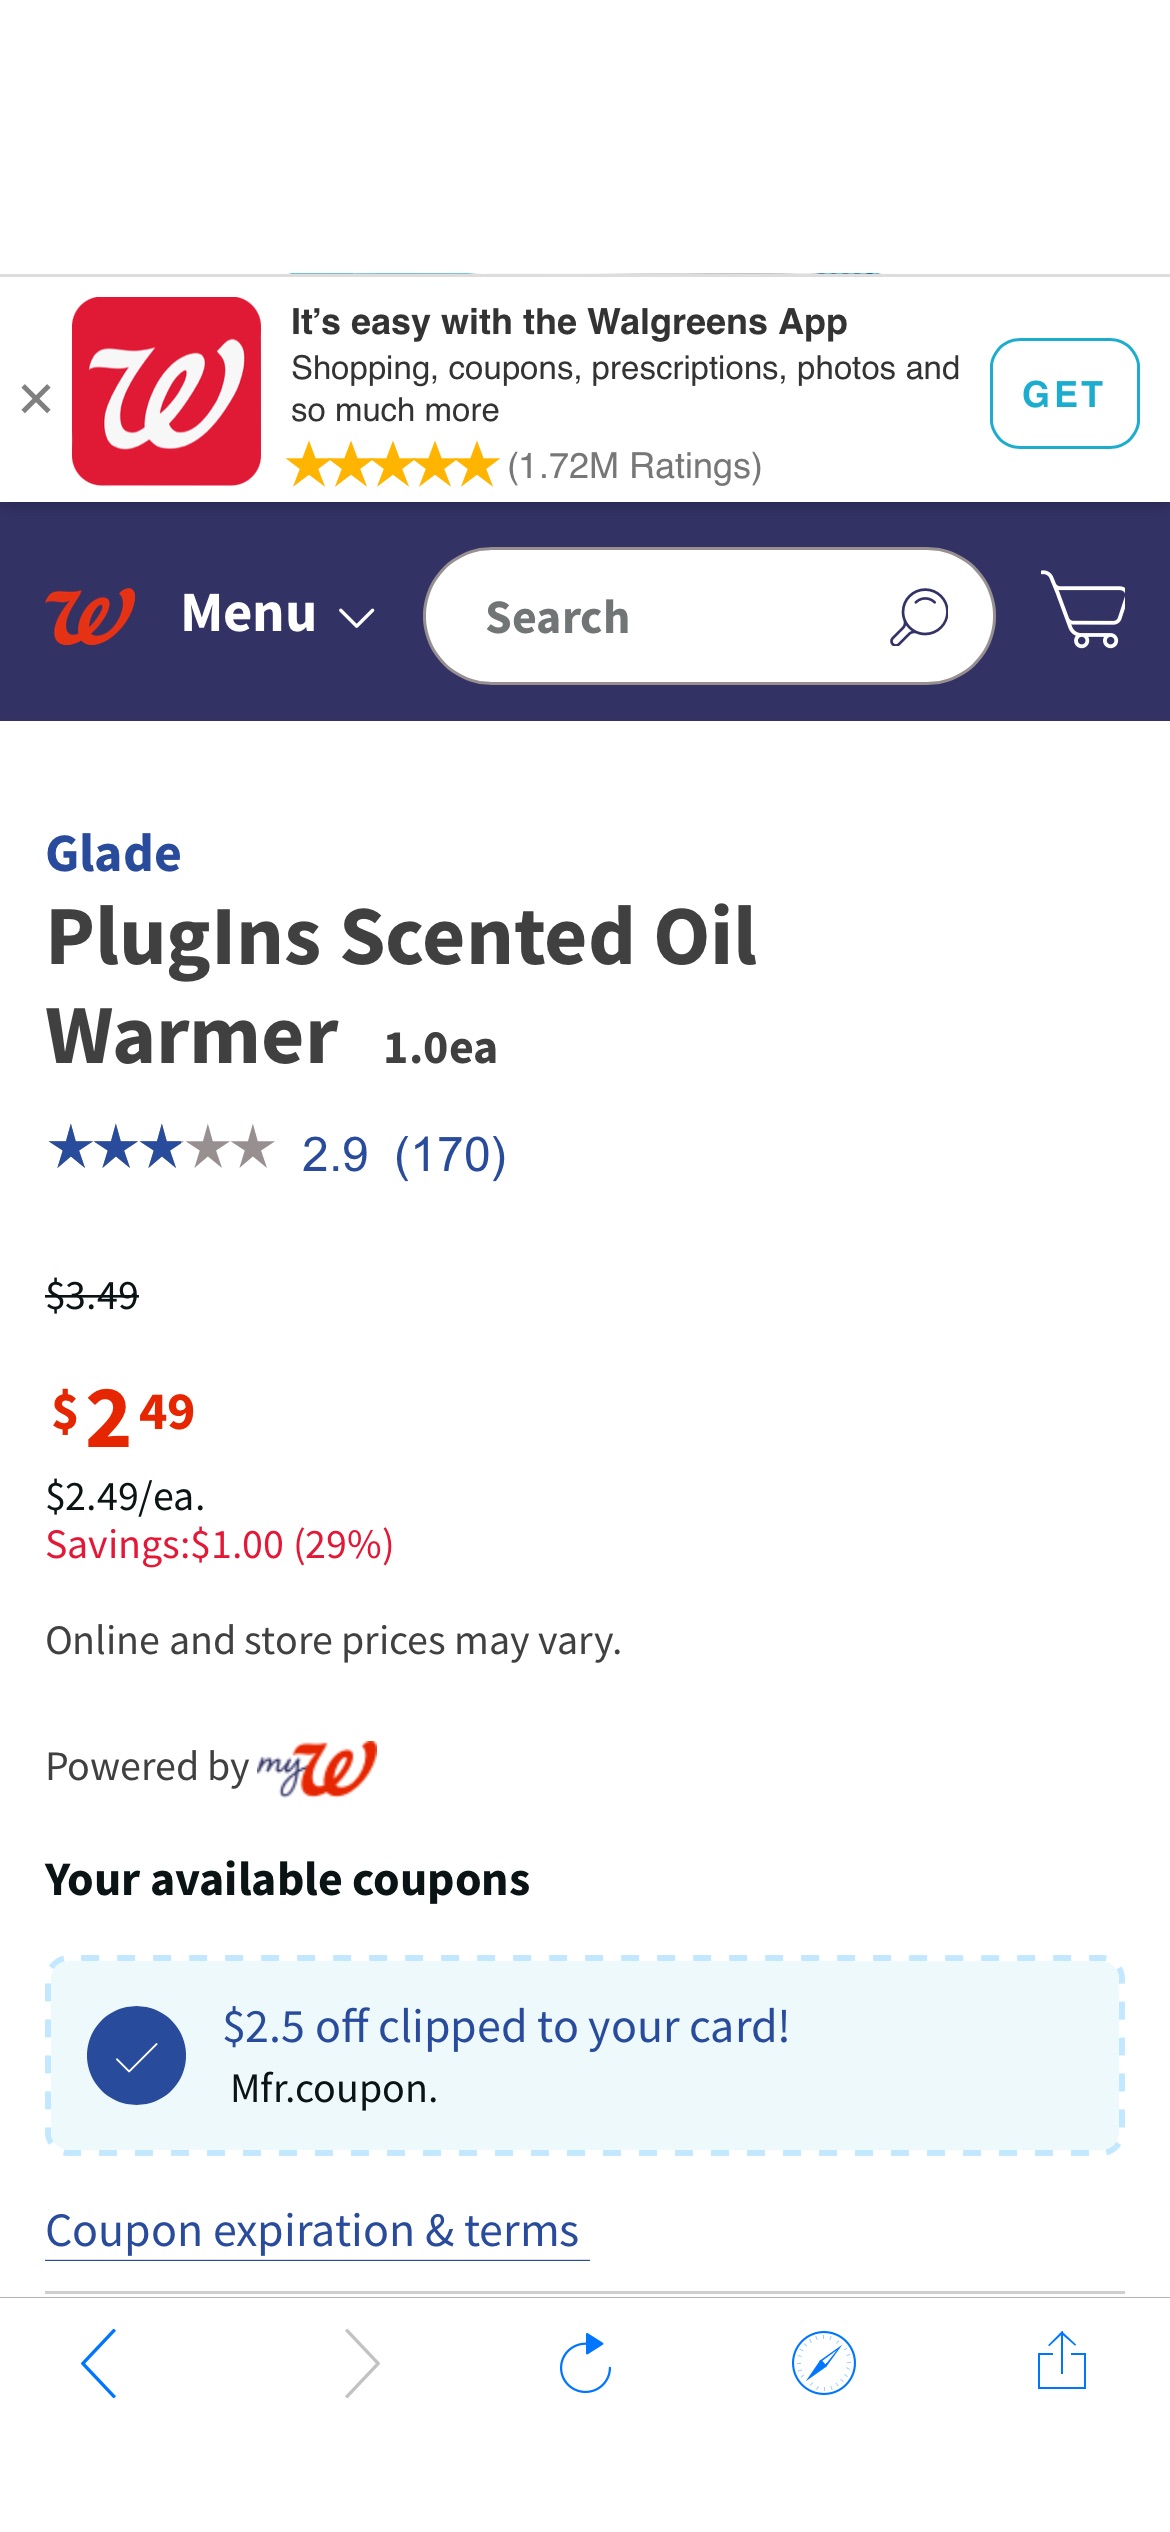 Glade PlugIns Scented Oil Warmer | Walgreens 免费glade精油加热插头